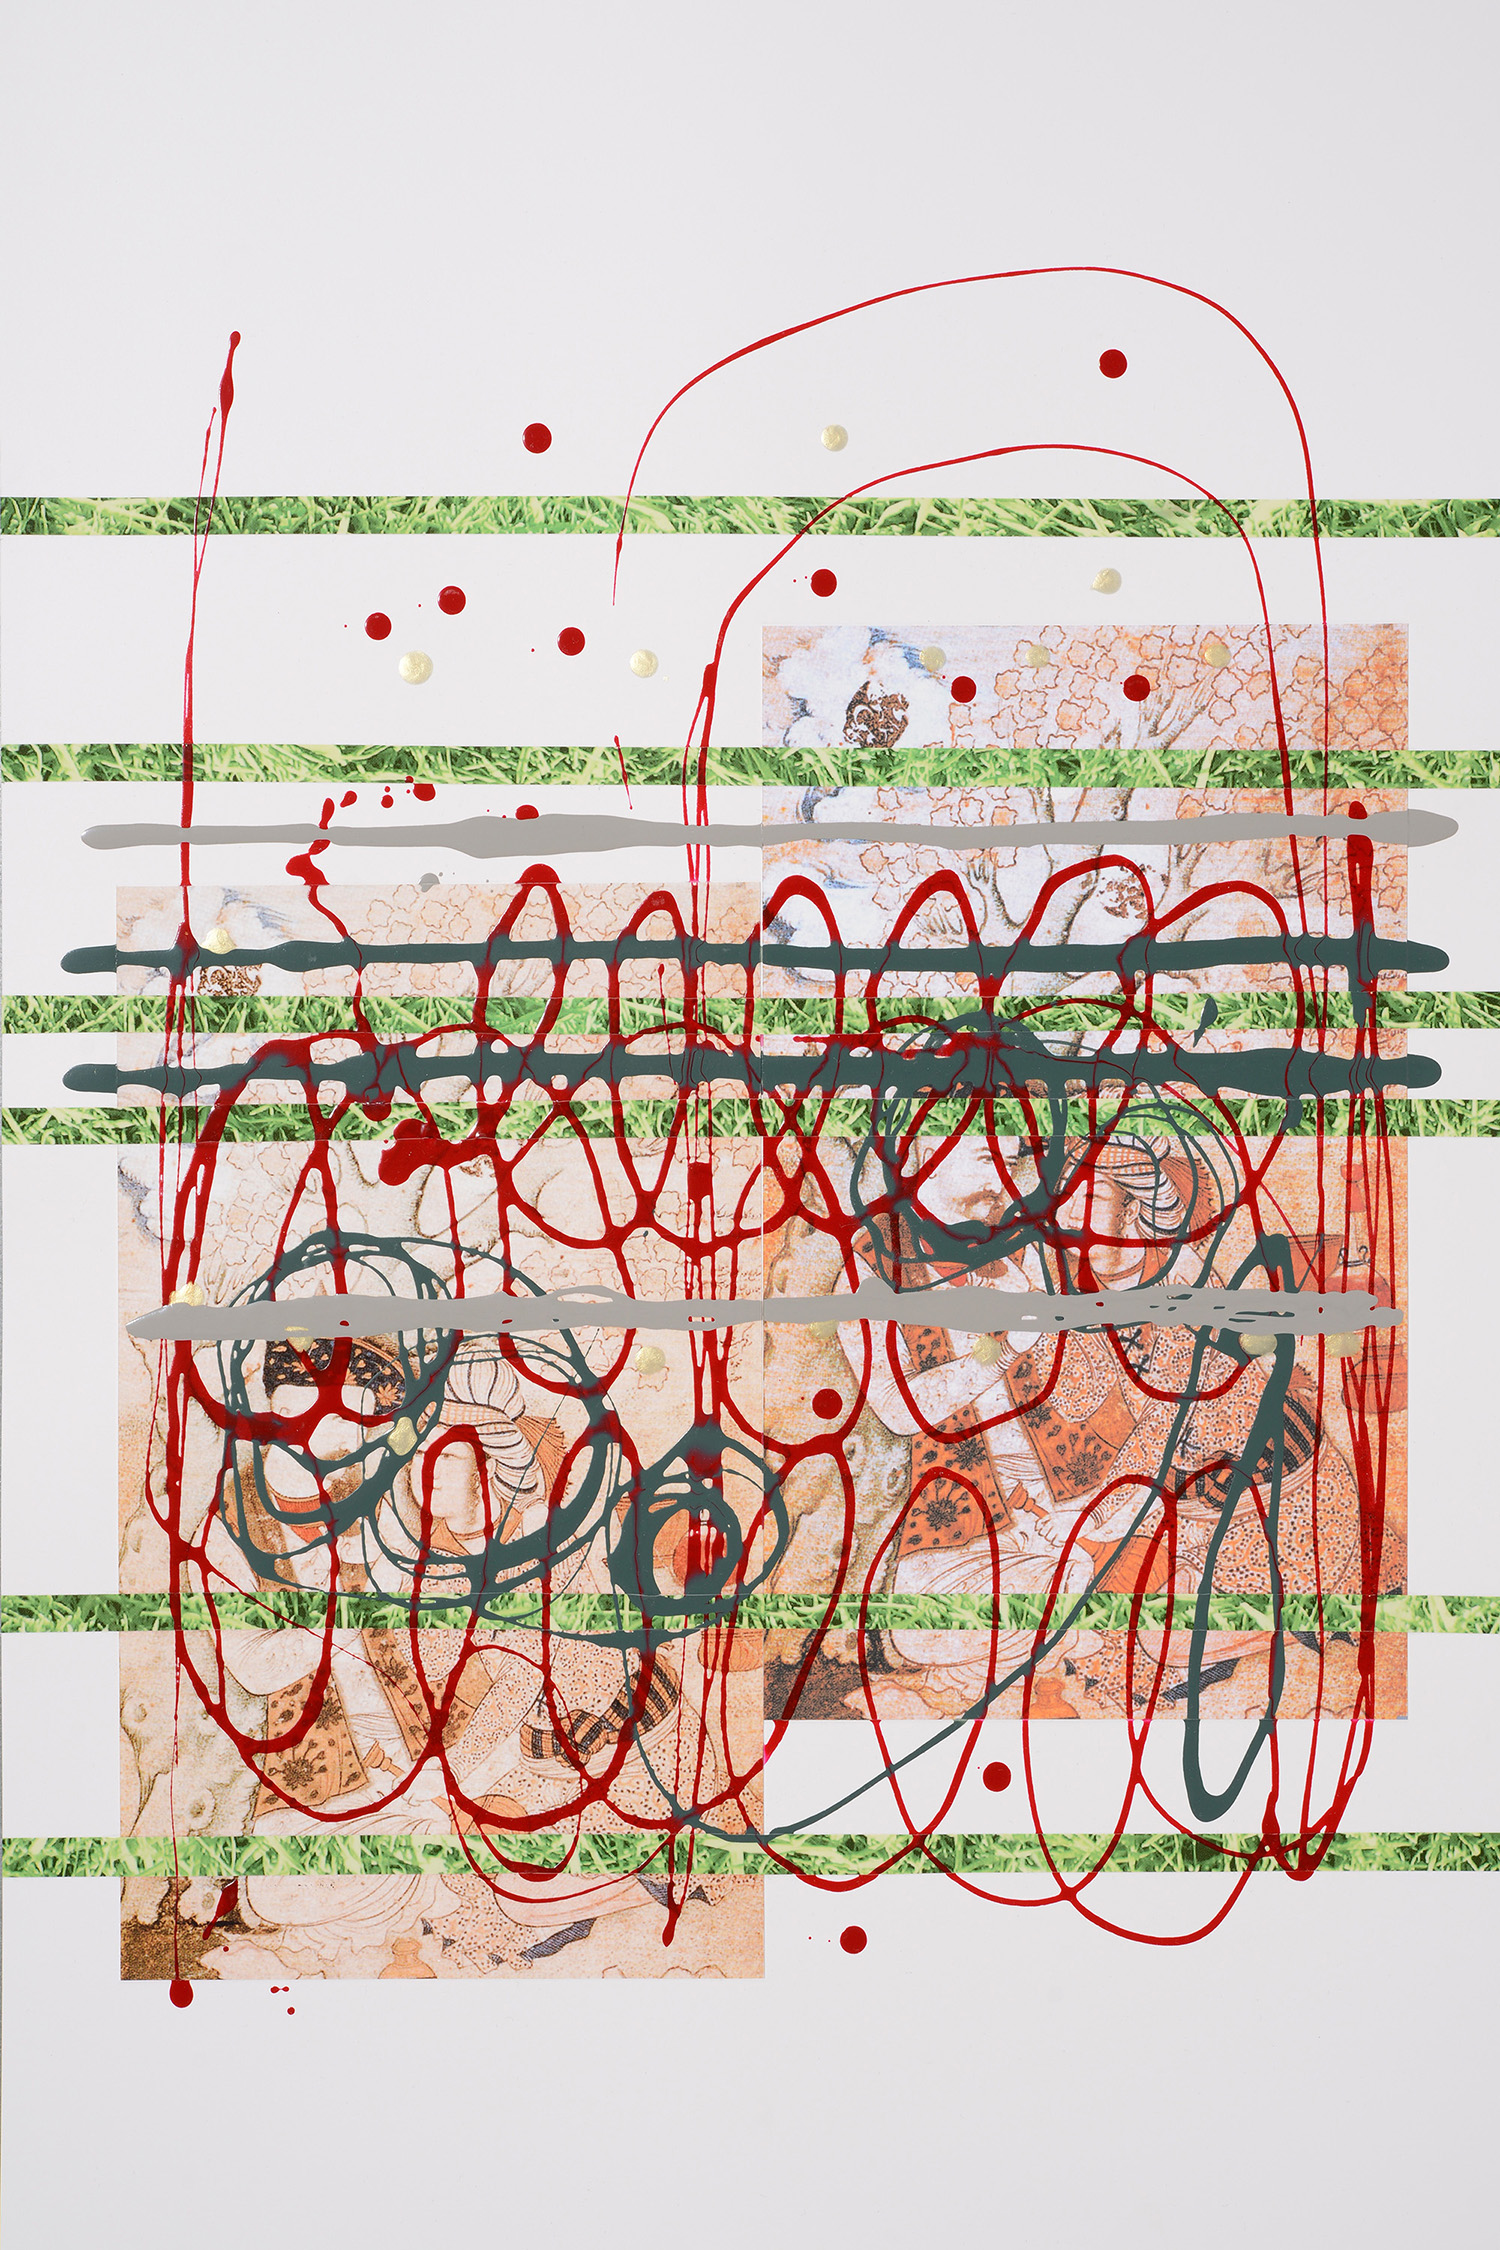 Markues, Secret Rendezvous, 2013, mixed media on paper, 60 x 40 cm.jpg